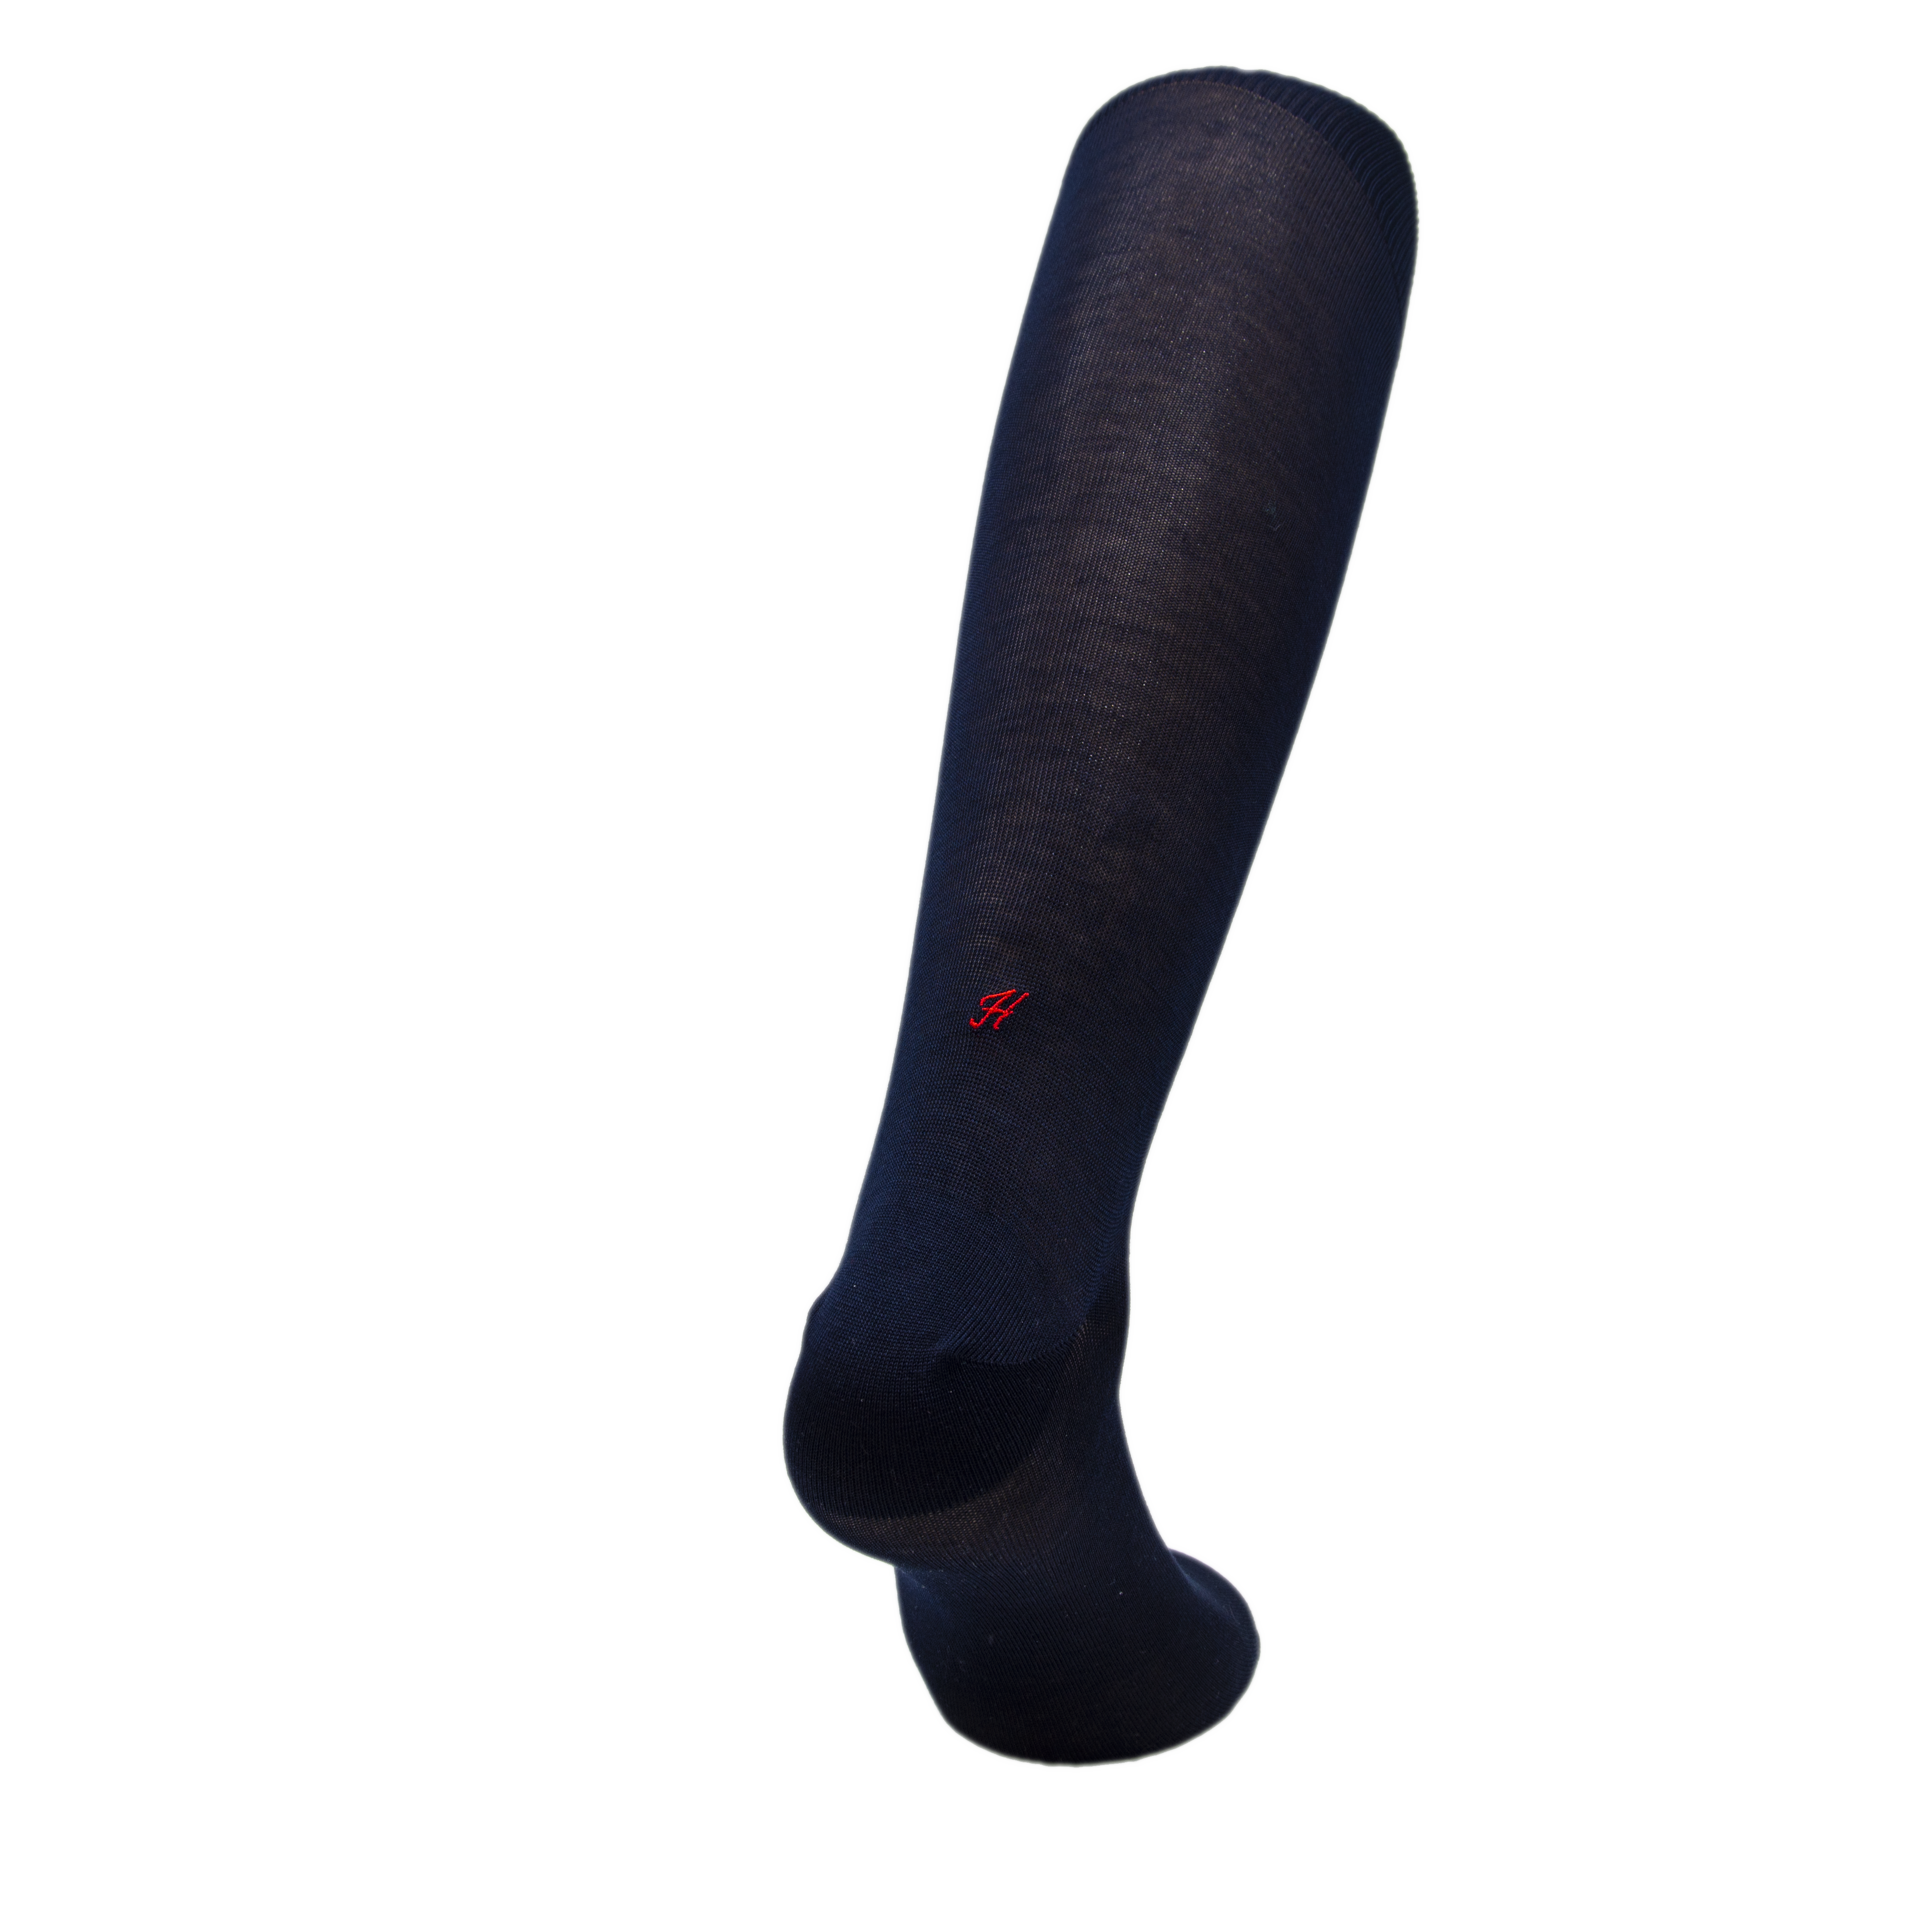 Blue Men's Socks with Italic Red Initials - Filo di scozia Super light Stretch - Size 40/45 - 155